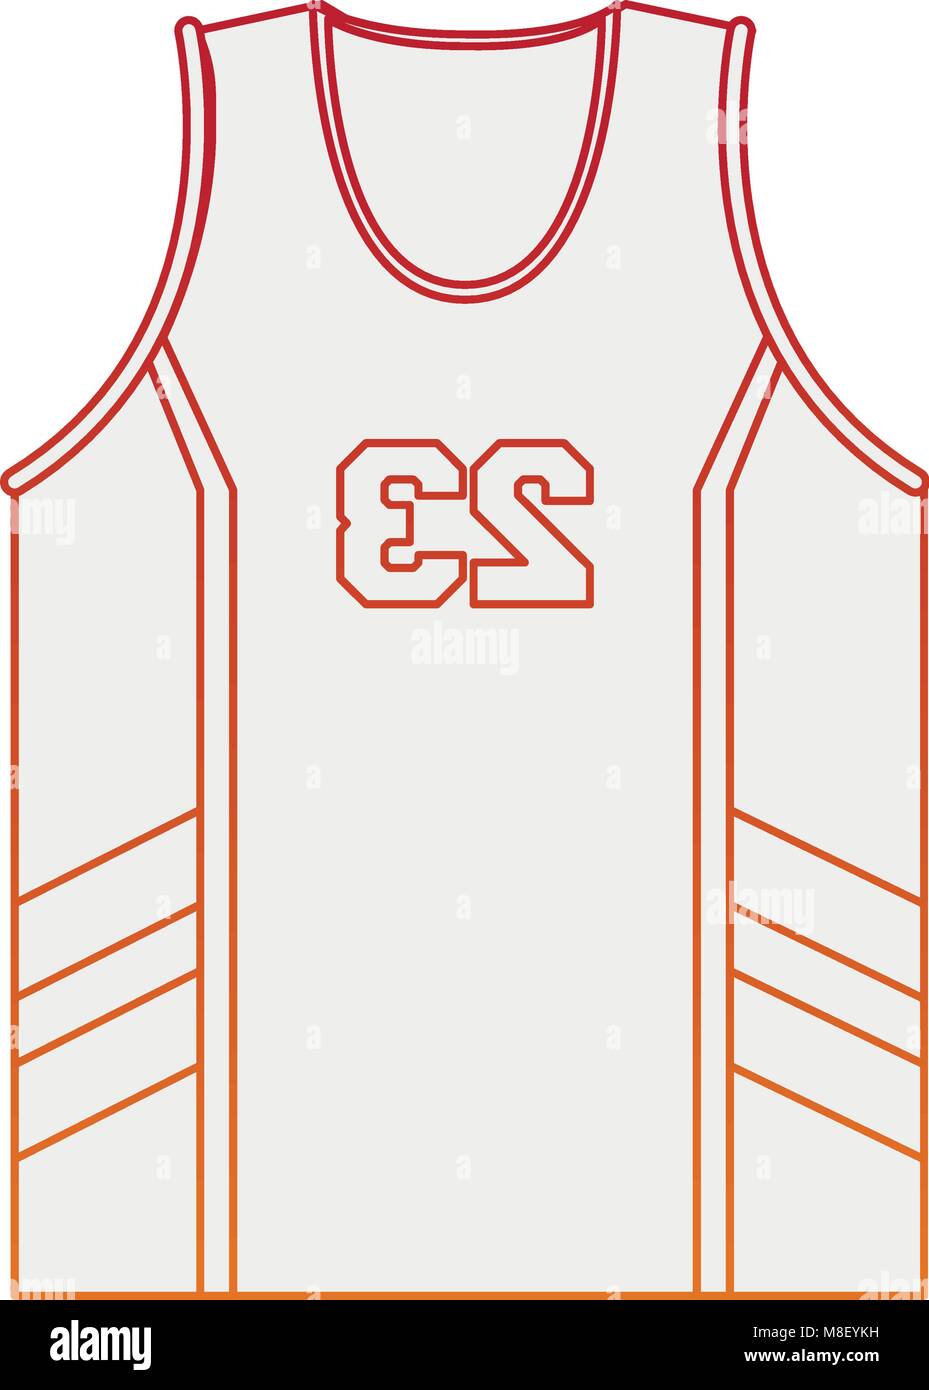 basketball jersey icon Stock Vector Image & Art - Alamy